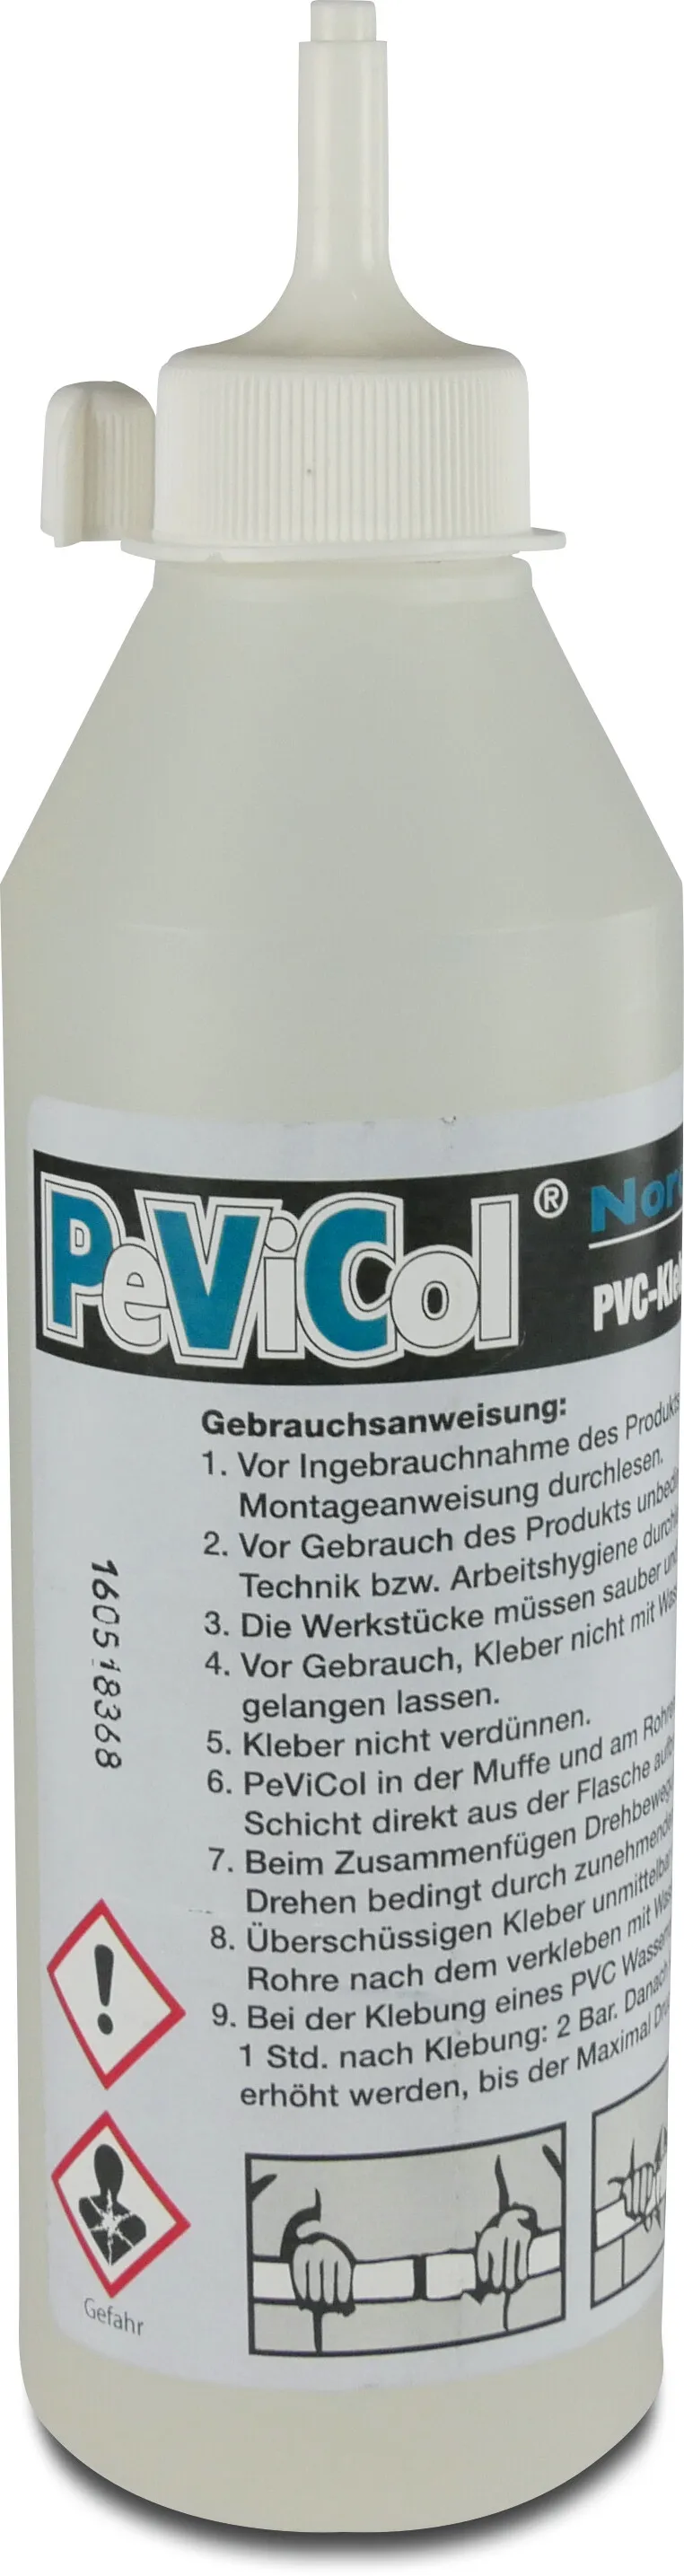 PVC lim 570g tube type PeViCol